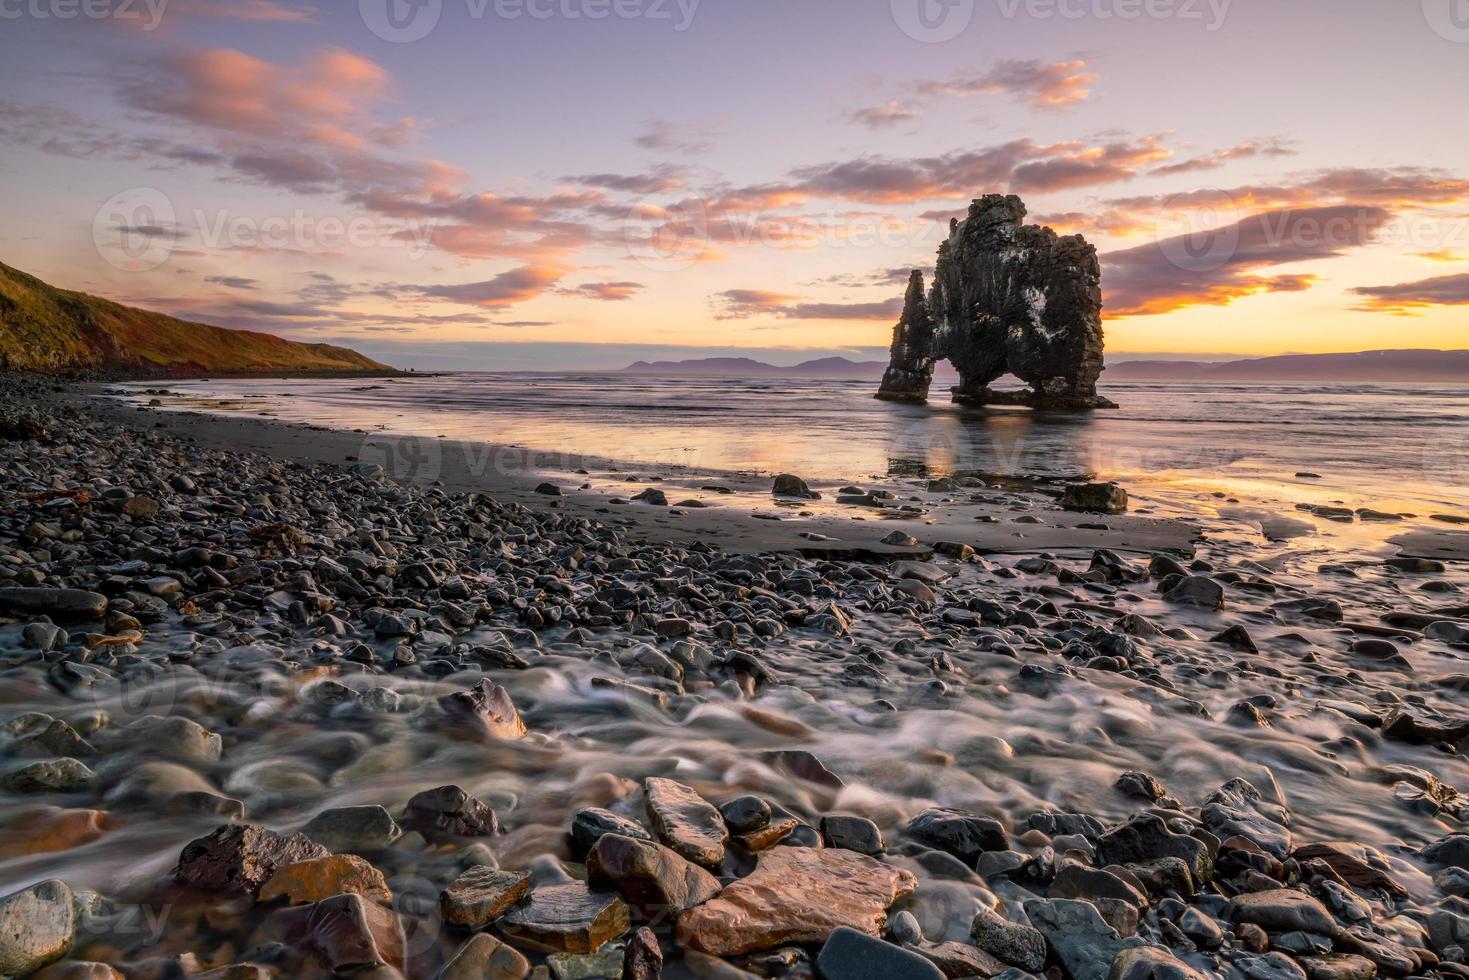 paisagem da natureza islandesa. atrações turísticas famosas, hvitserkur foto